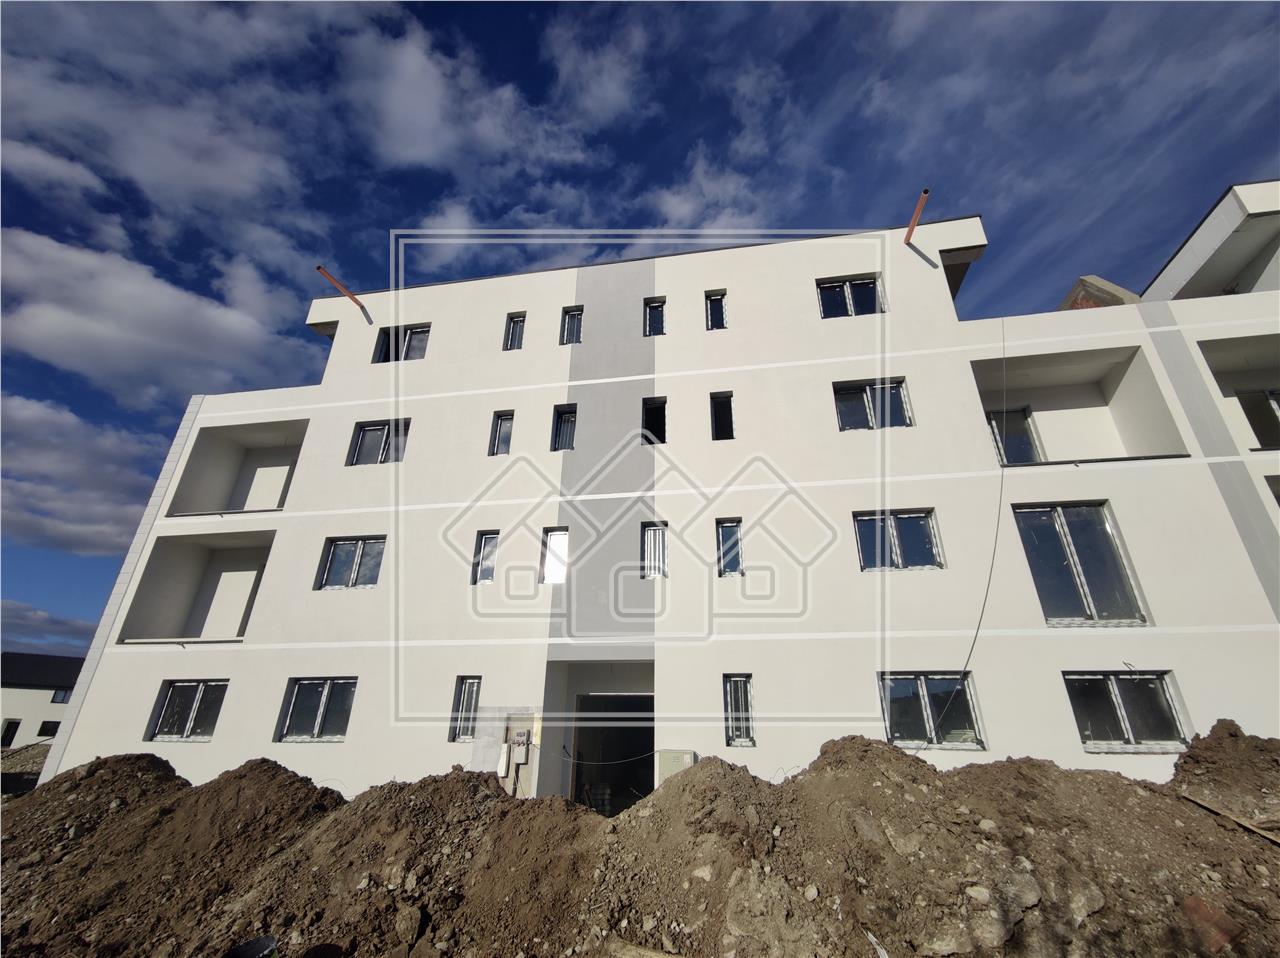 Apartment for sale in Sibiu, Selimbar - 2 rooms - floor 1 - underfloor